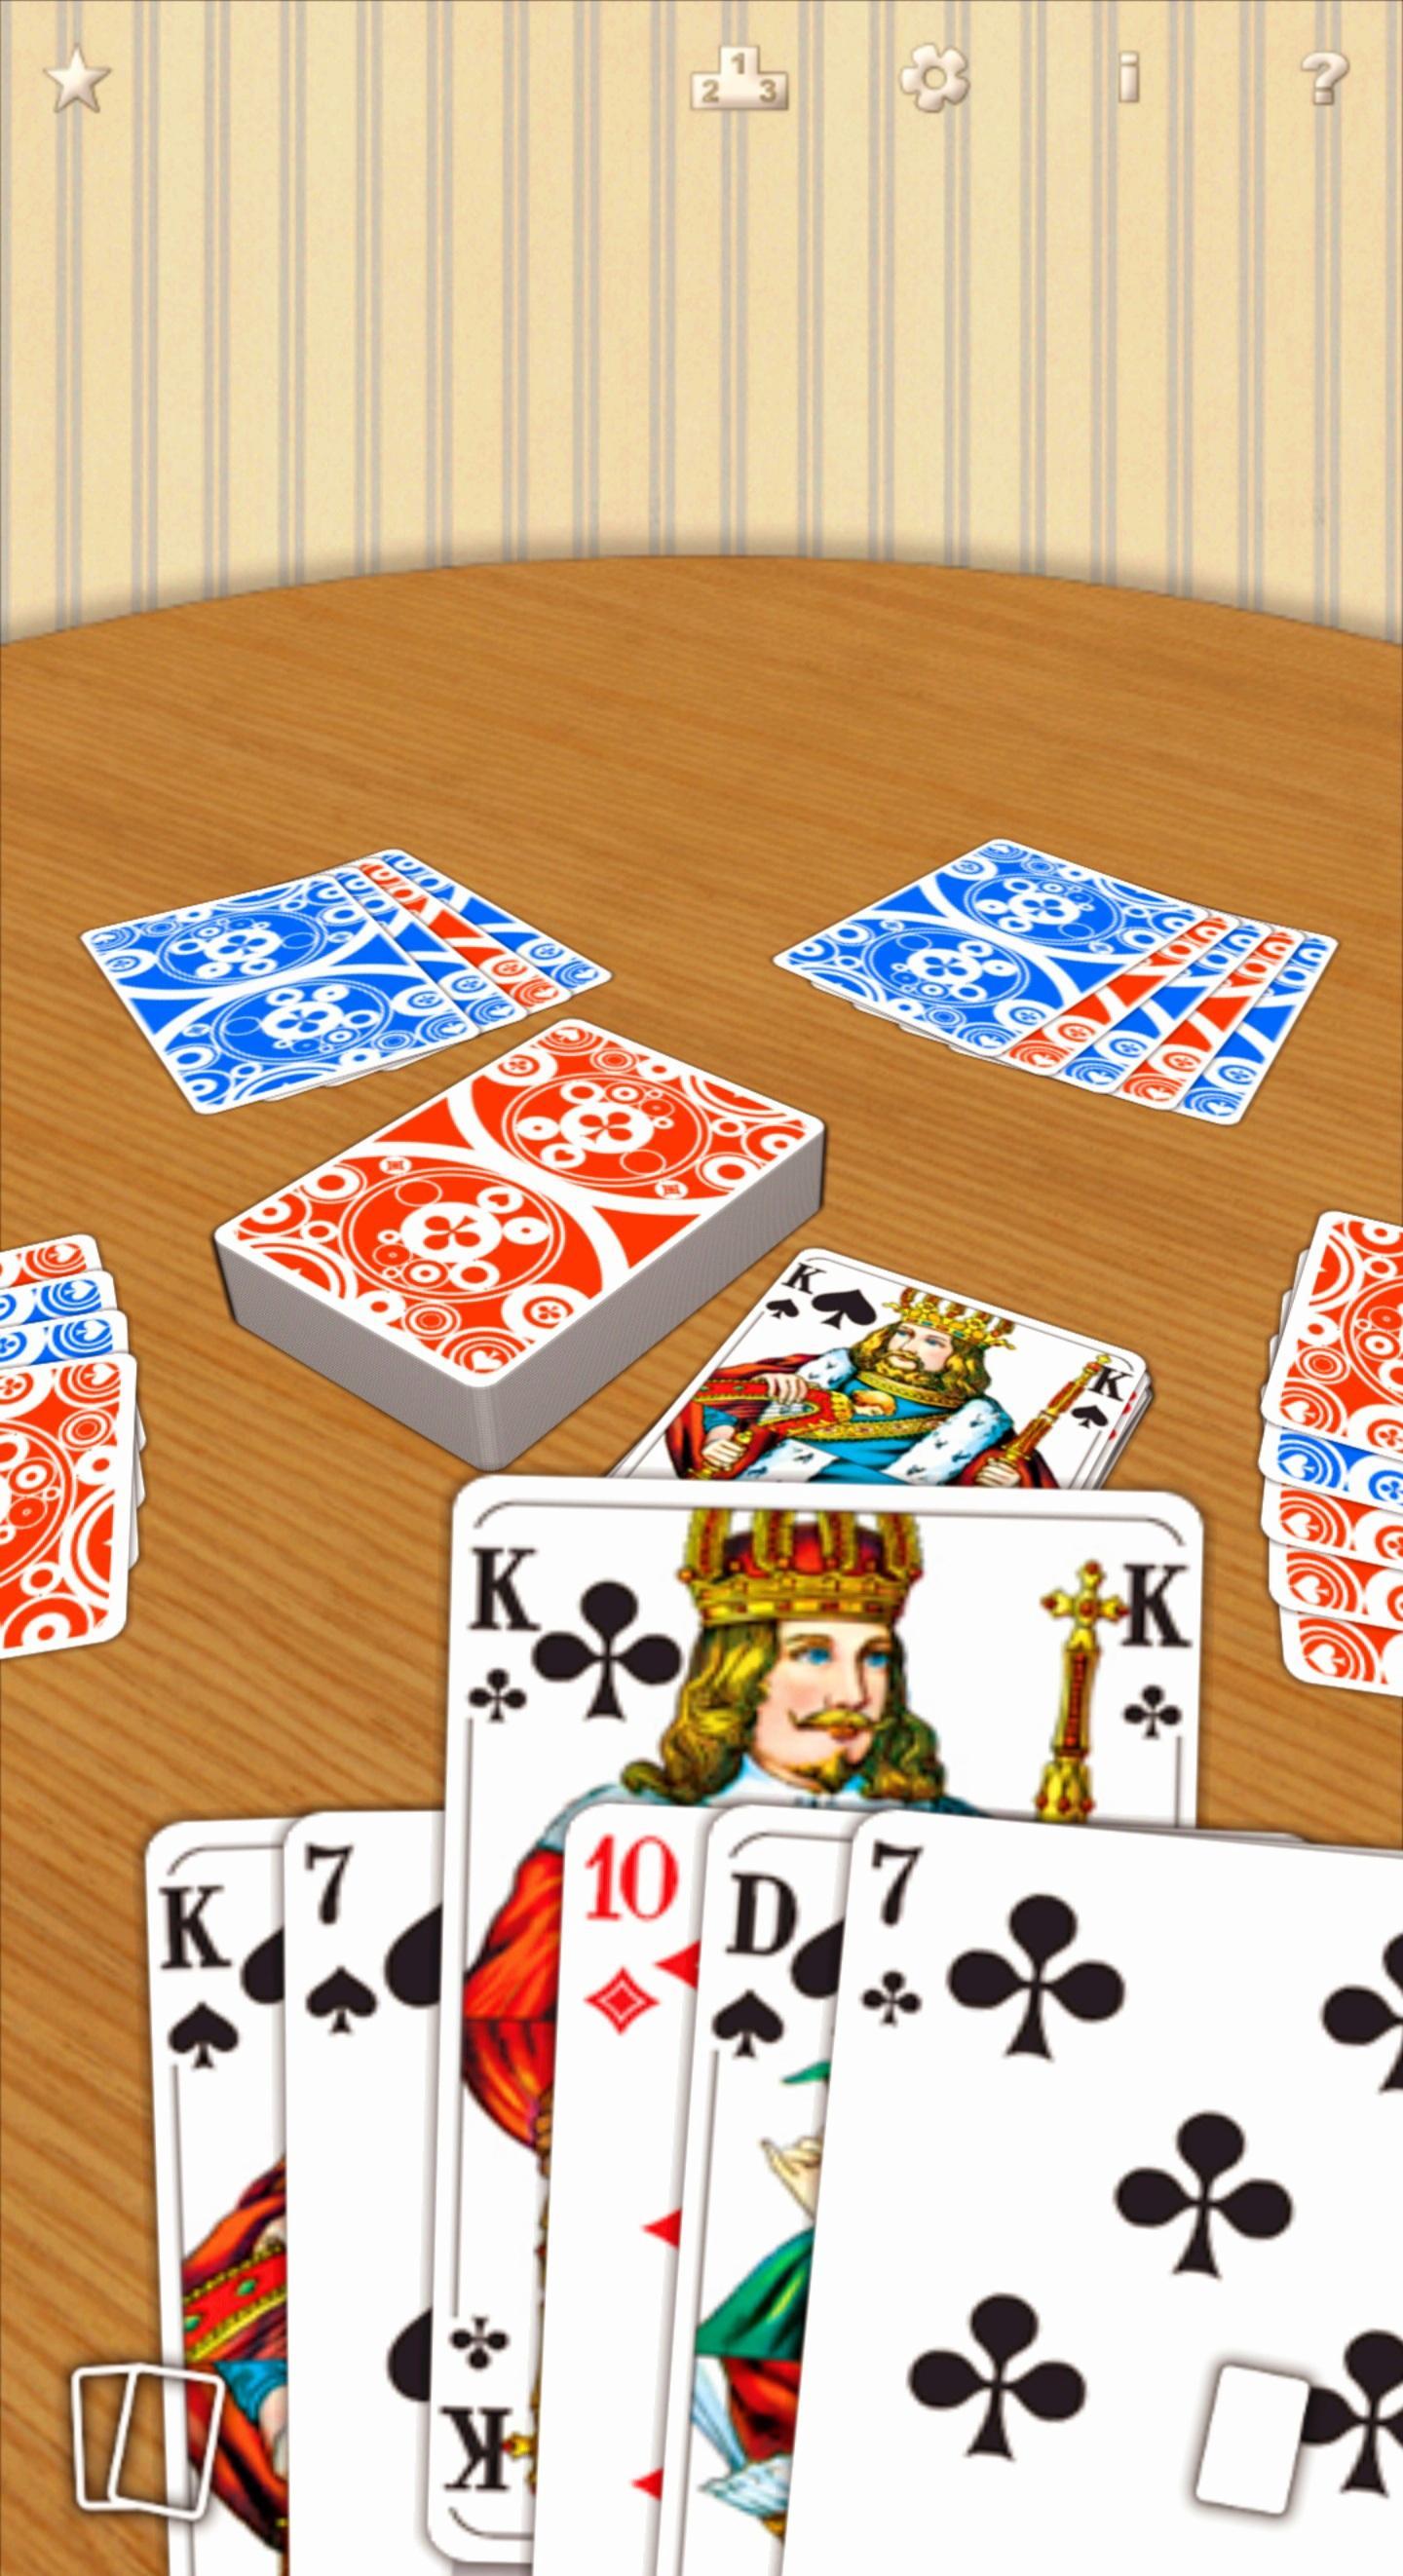 Crazy Eights free card game 1.6.96 Screenshot 2